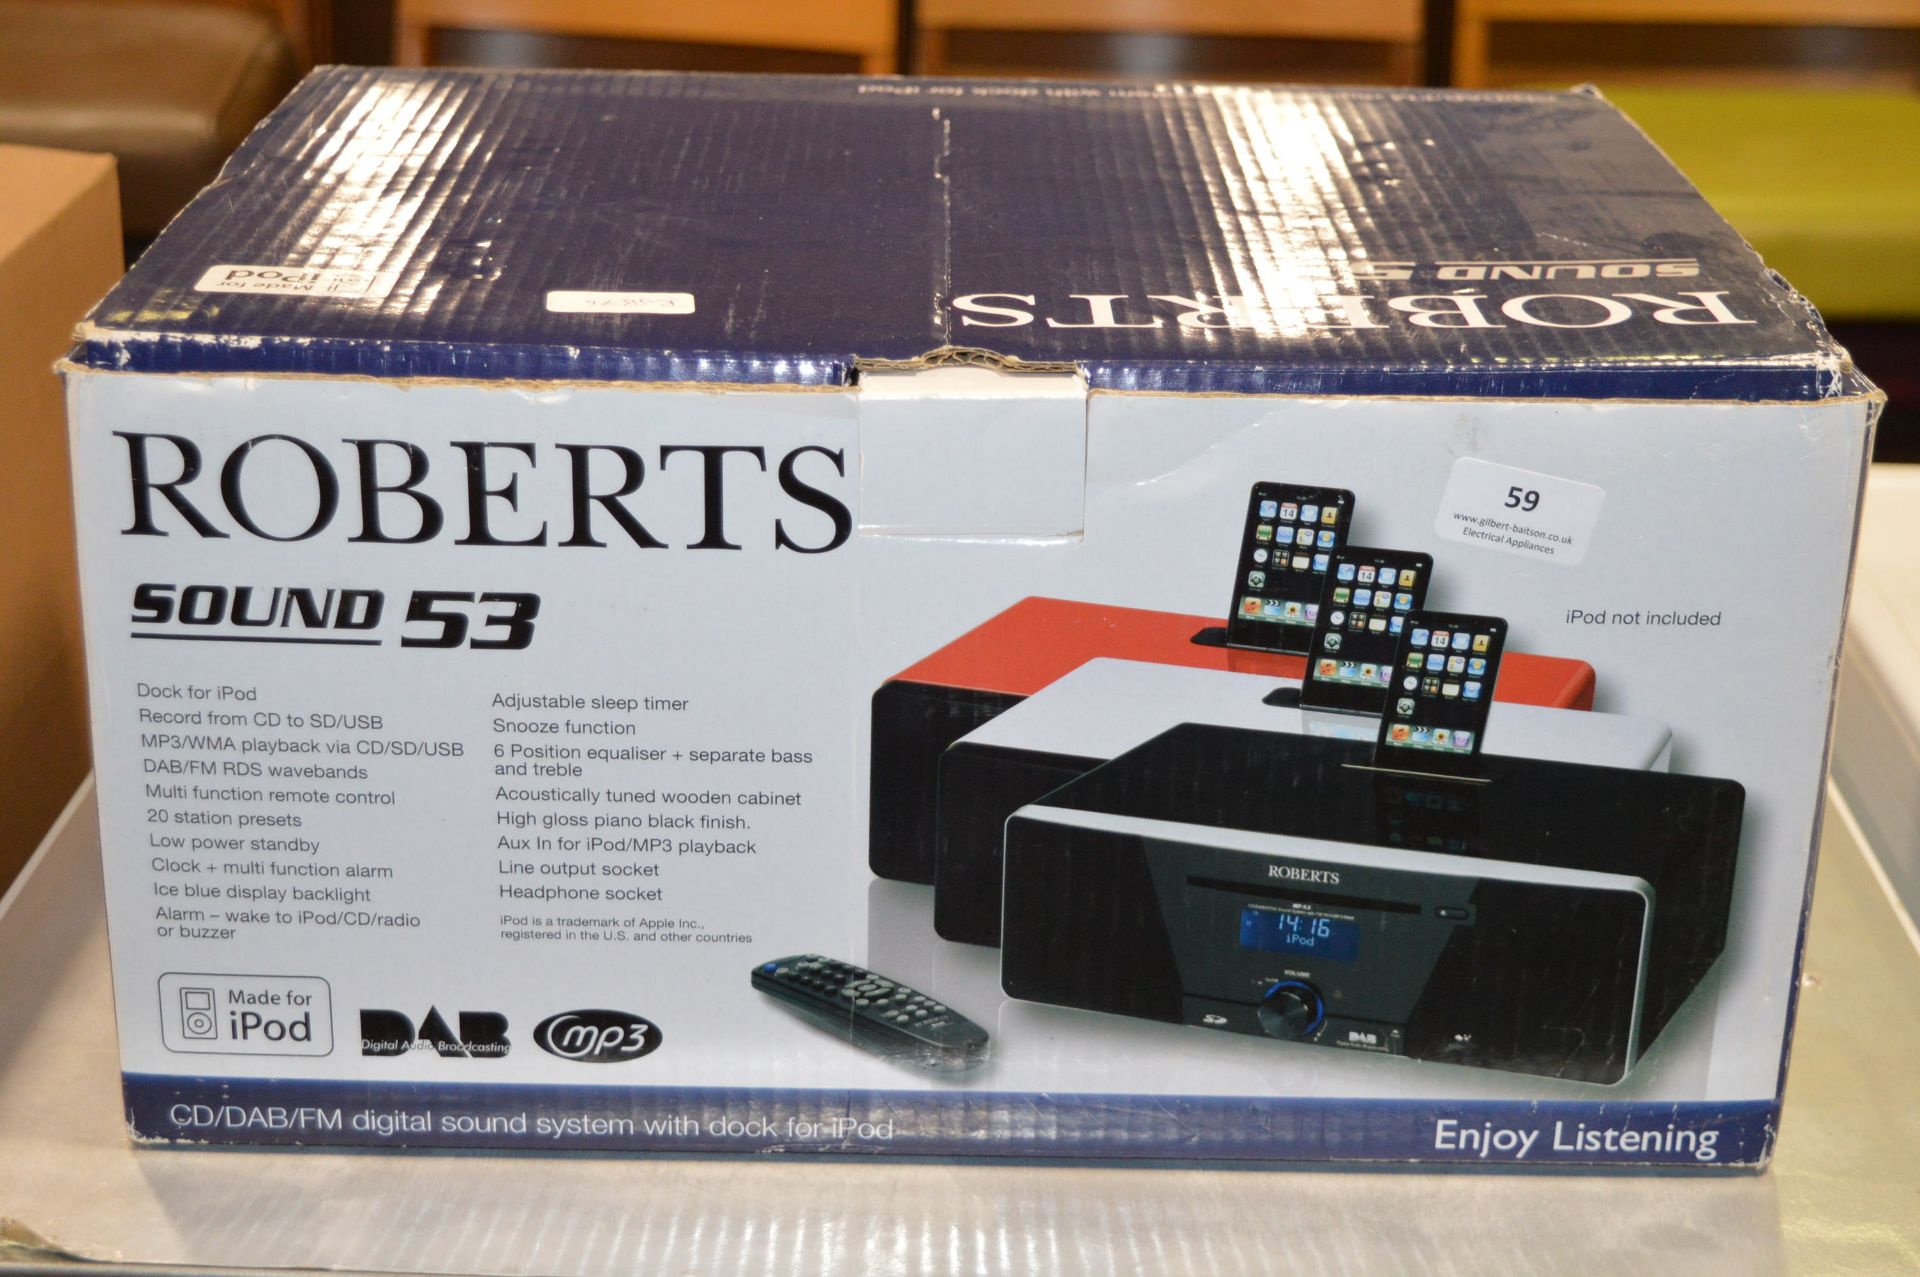 *Roberts Sound 53 Sound System